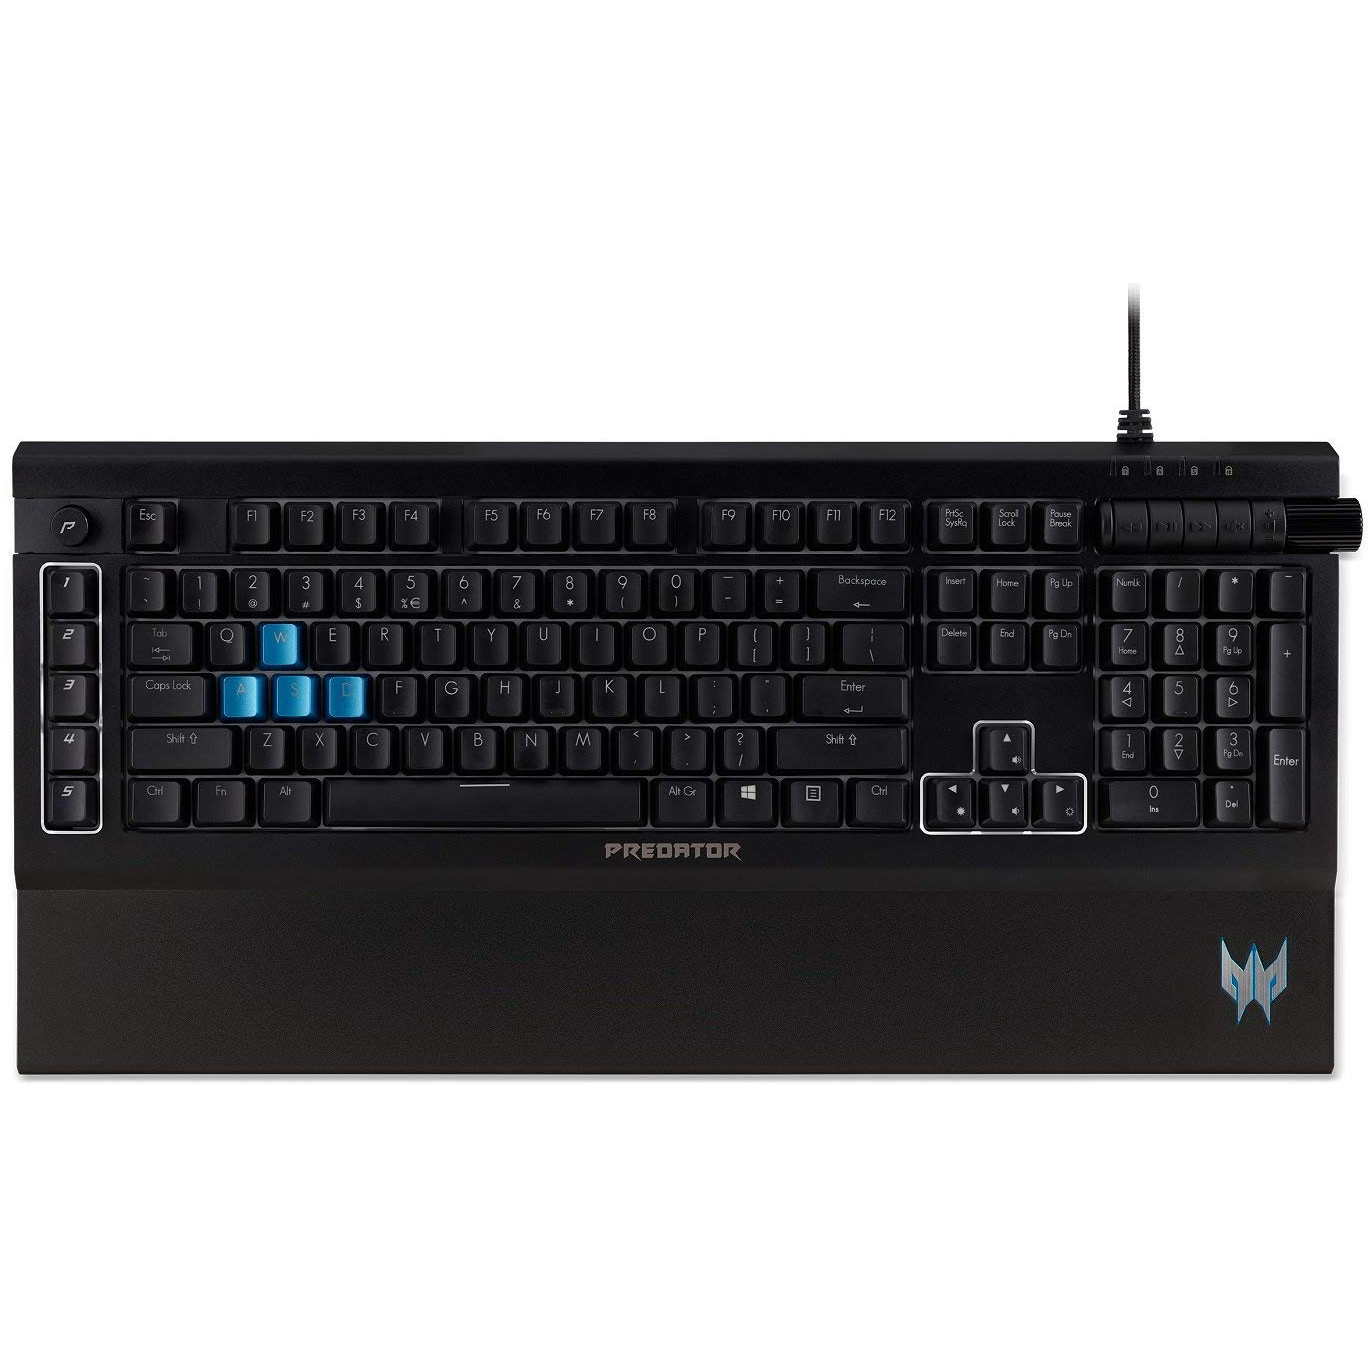  Acer  Predator Aethon 500 Gaming  Keyboard  NP KBD1A 01Q 